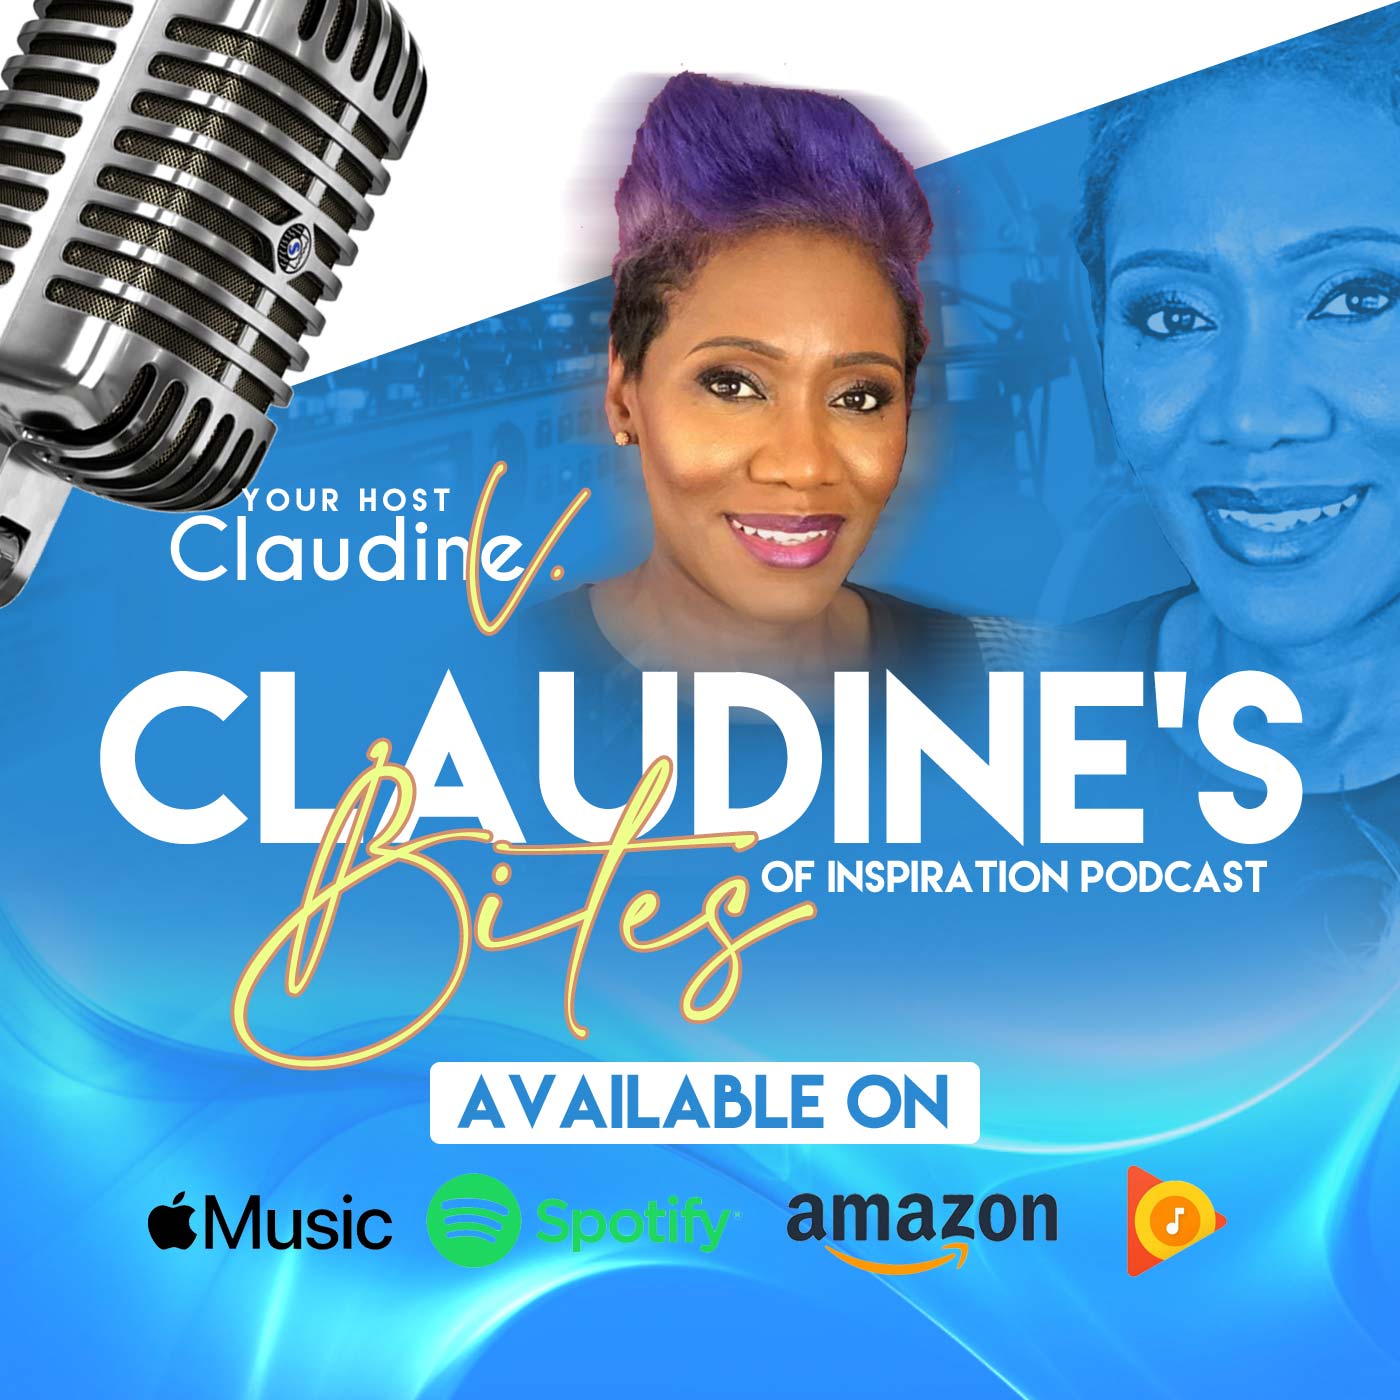 Claudine's Bites of Inspiration